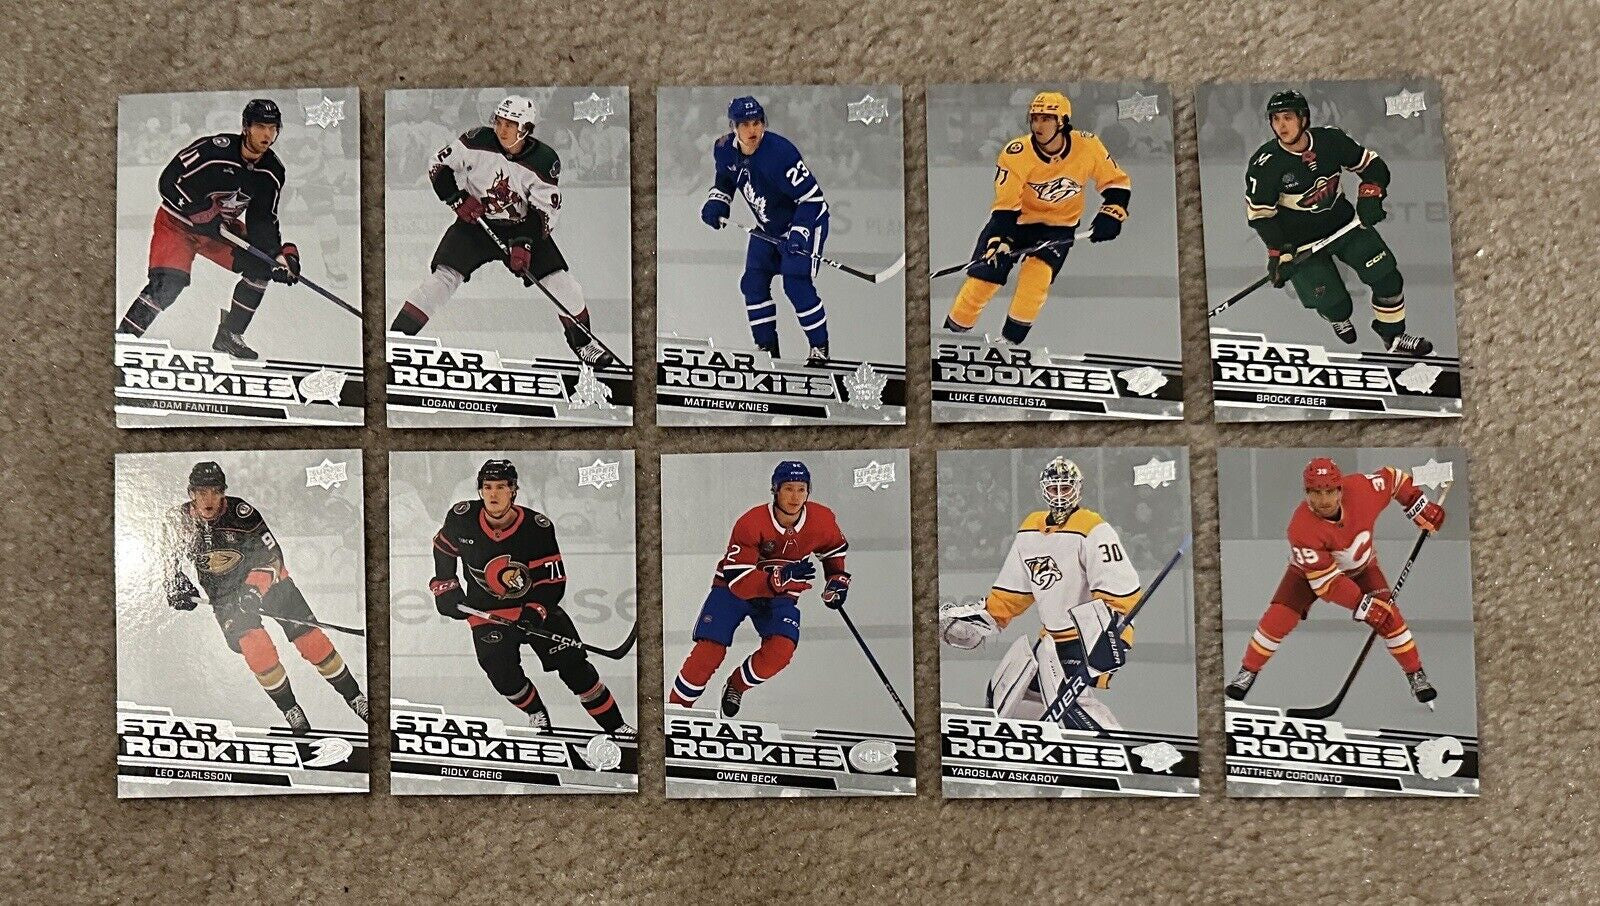 $2 Upper Deck NHL Star Rookies Hockey Trading Card Singles (May Be Various Years, Picked at Random)